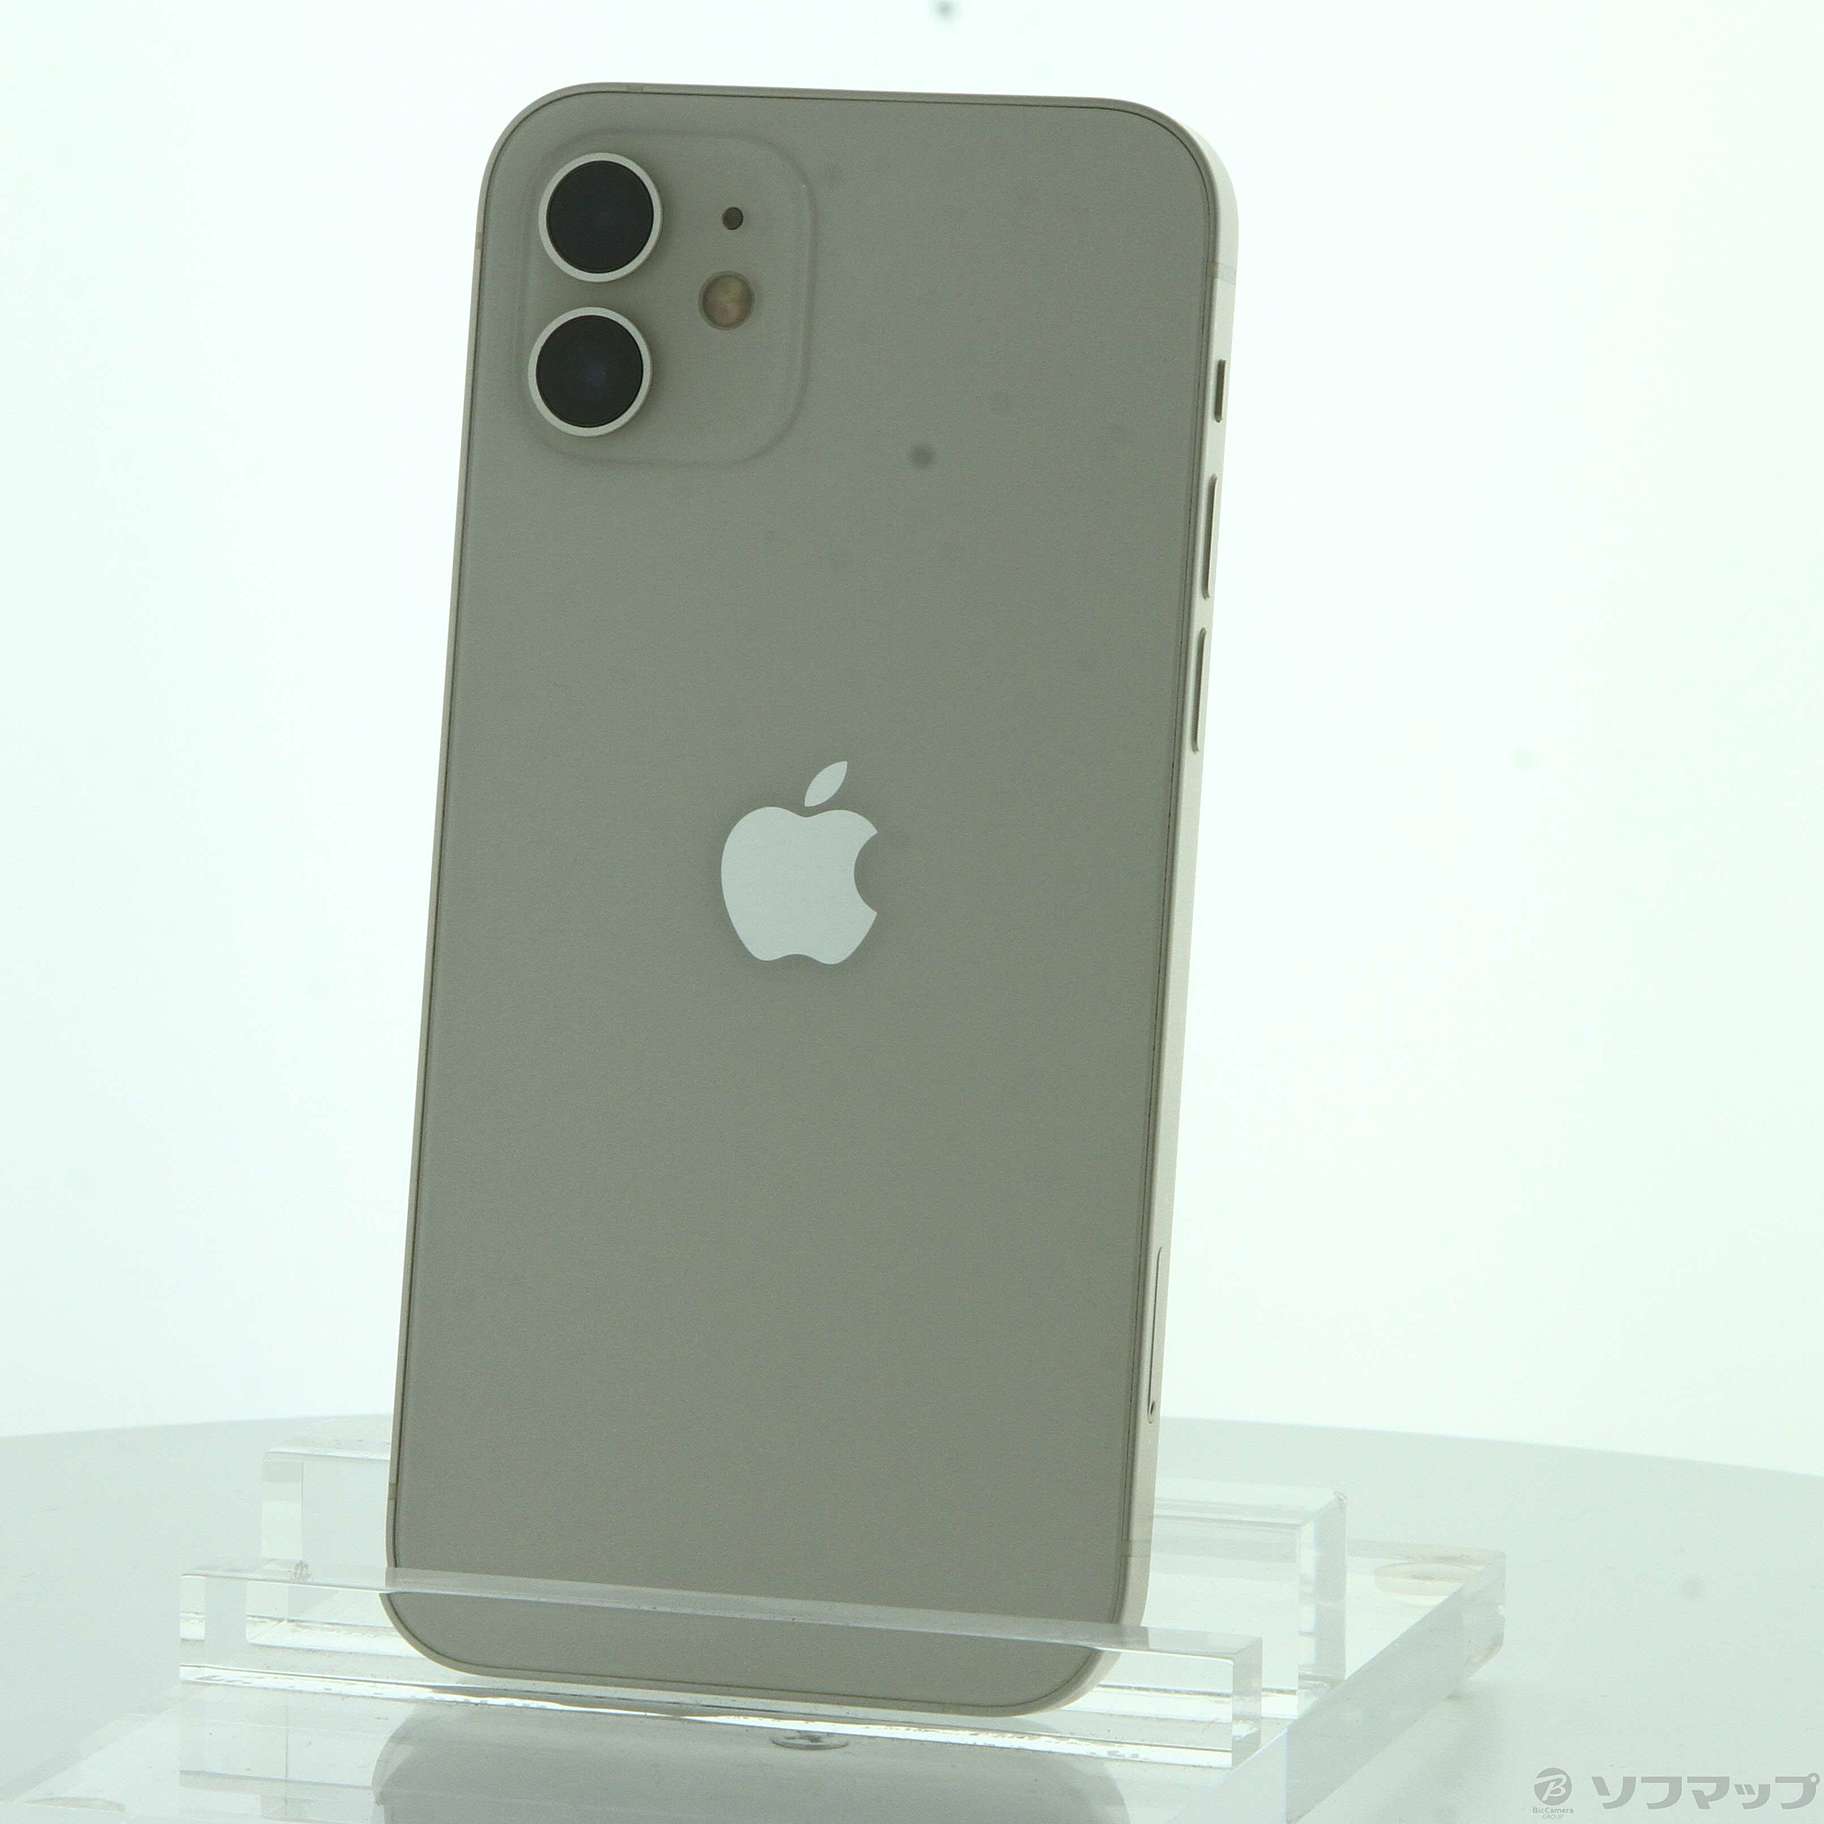 Apple【新品未使用】iPhone12 64GB ホワイト - スマートフォン本体